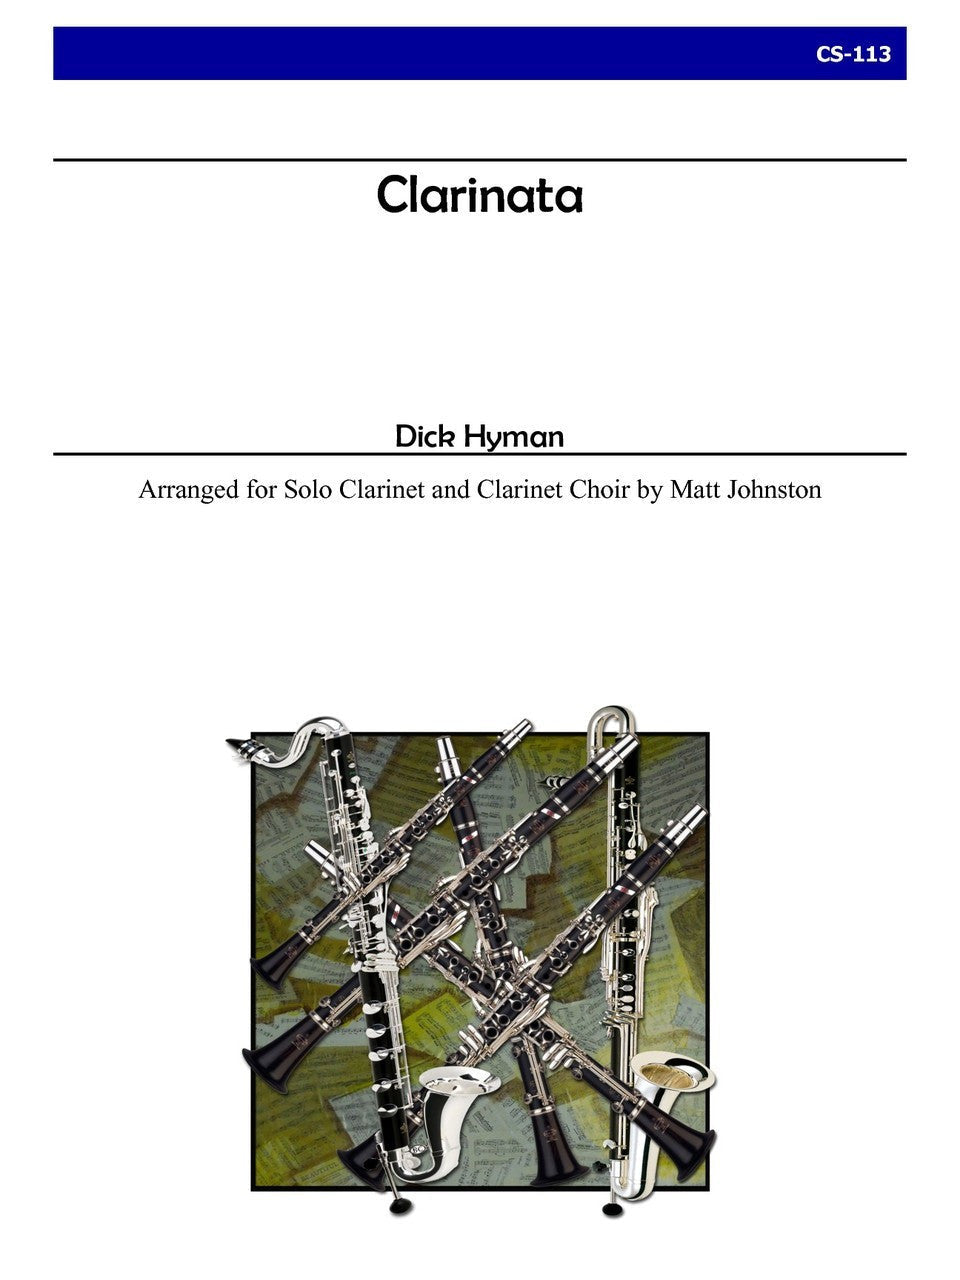 Hyman (arr. Matt Johnston) - Clarinata